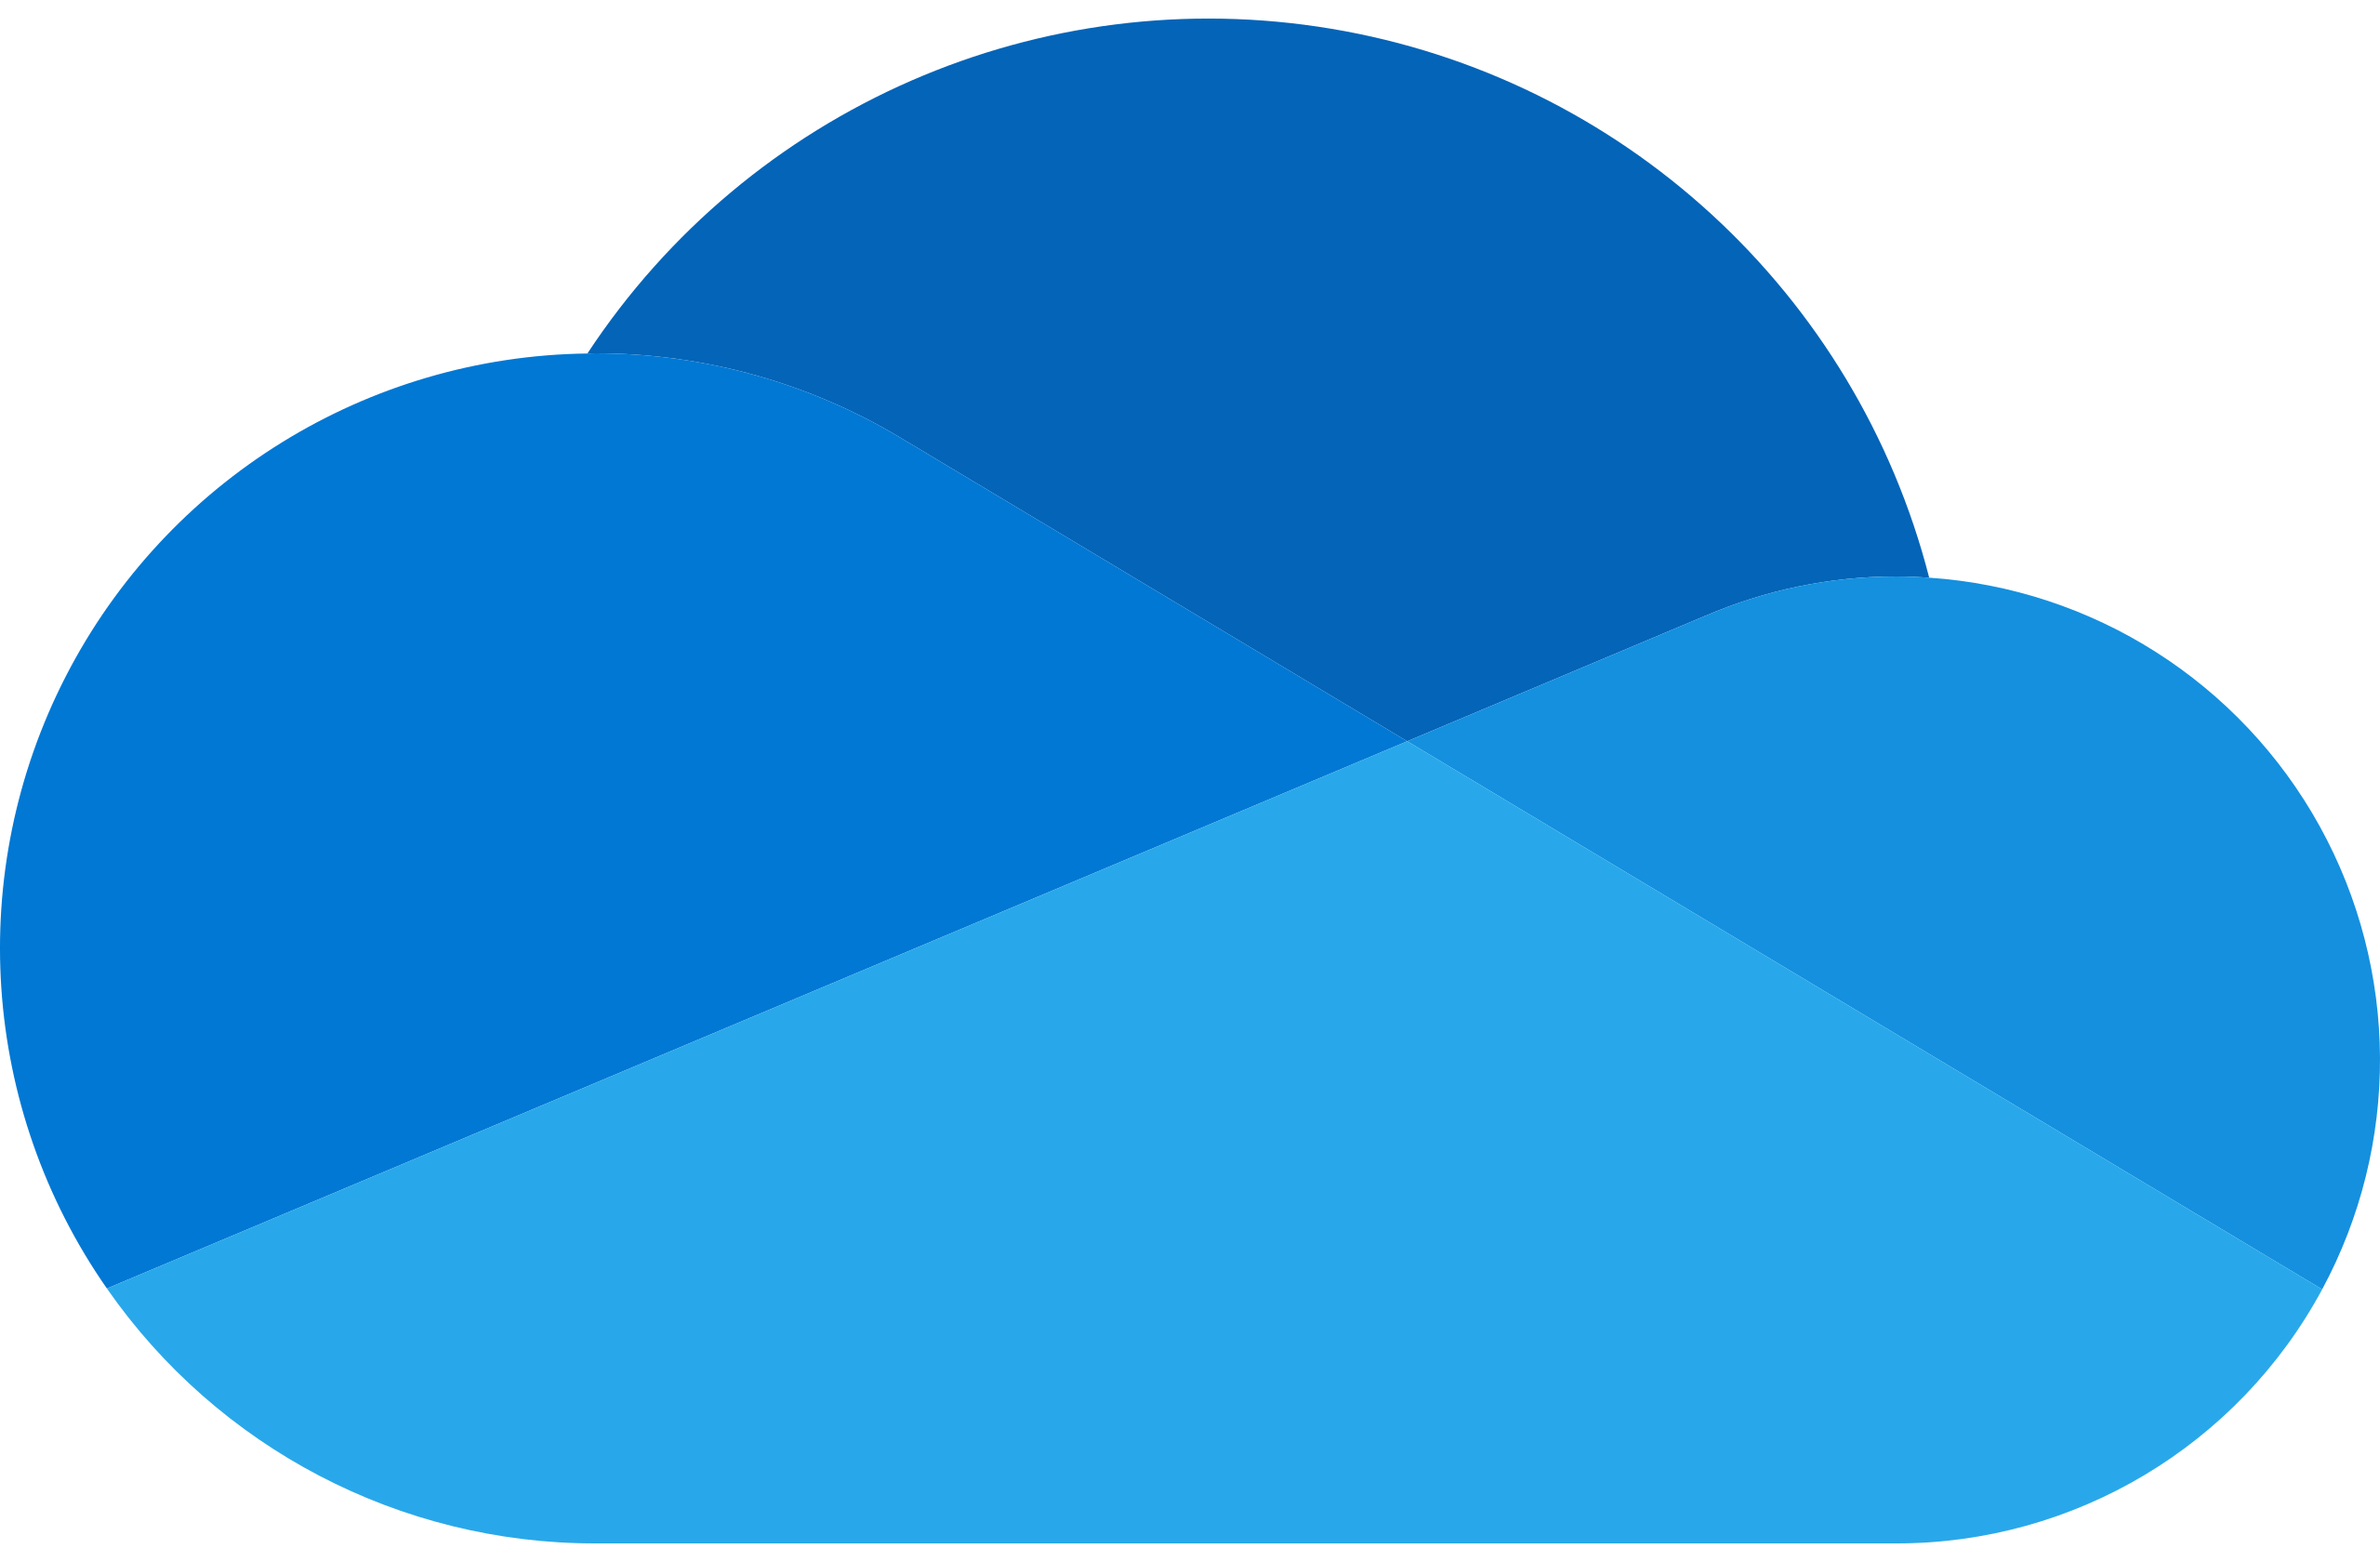 oneDrive logo